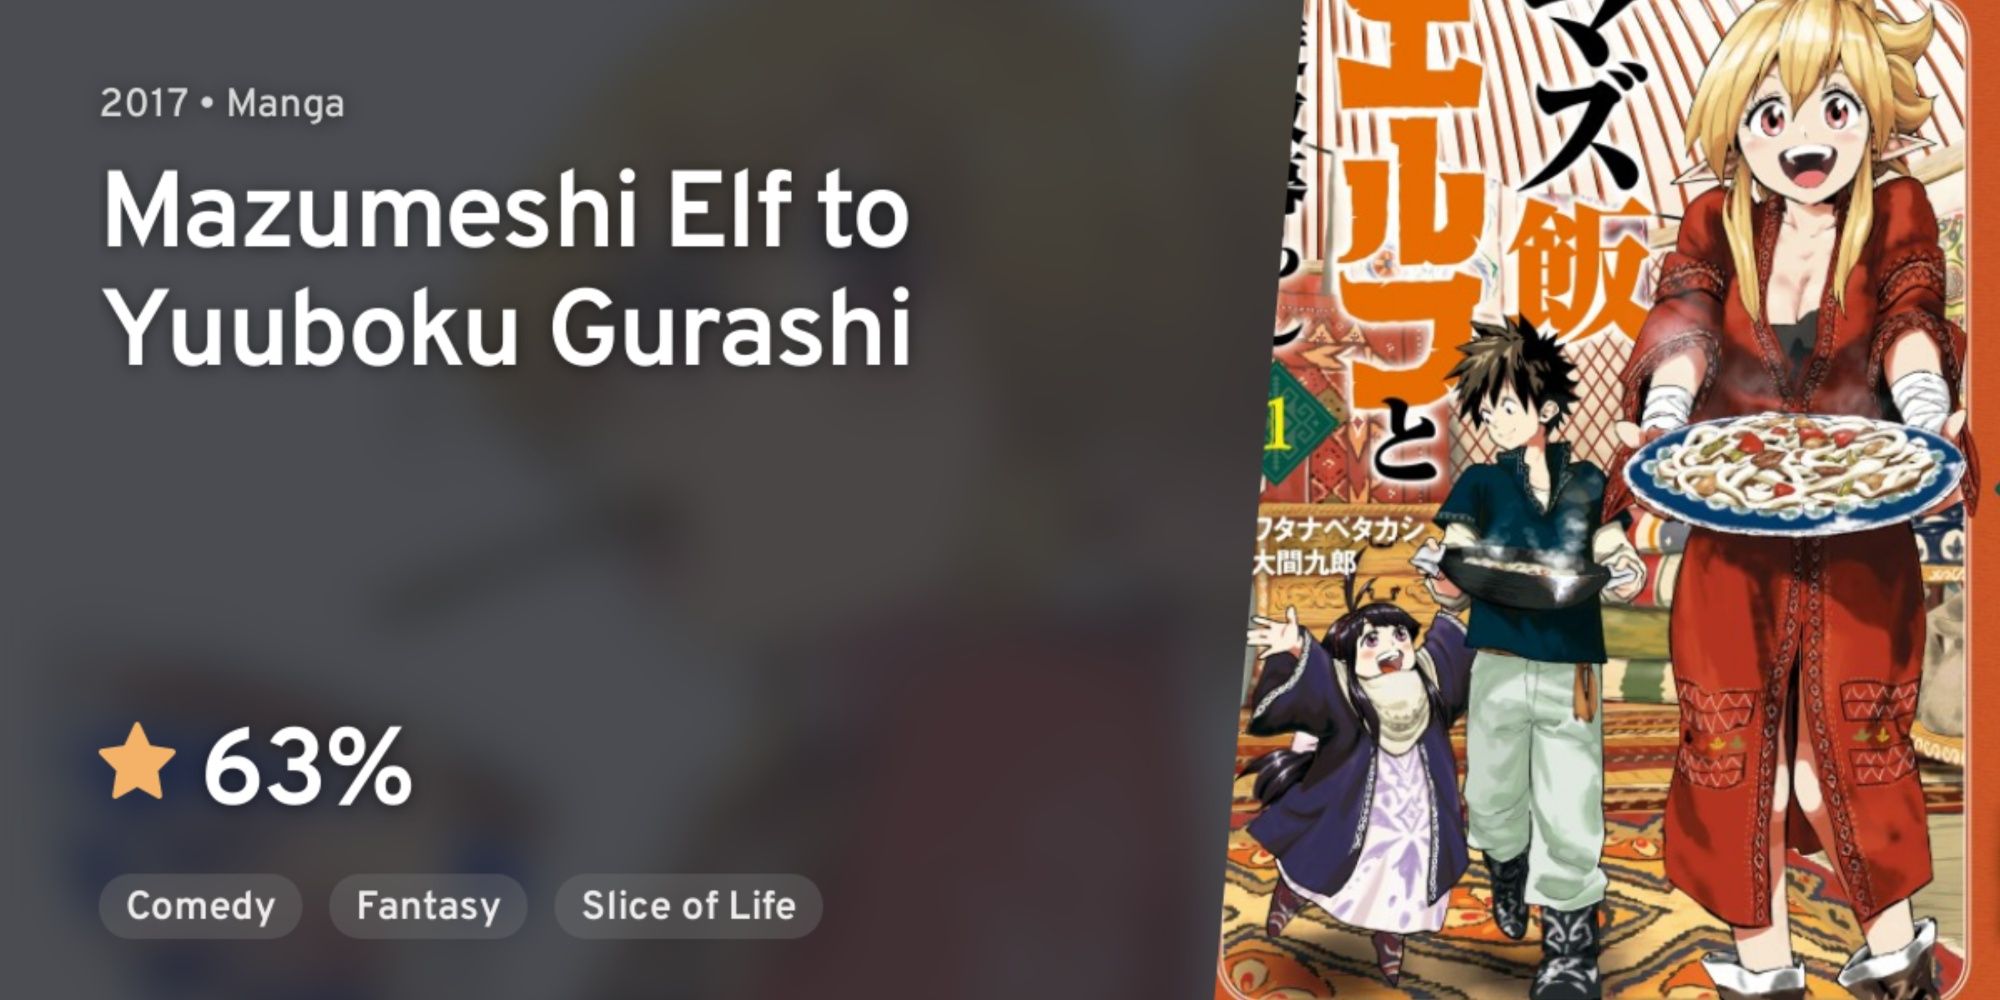 Mazu Rice Elf And Nomadic Life